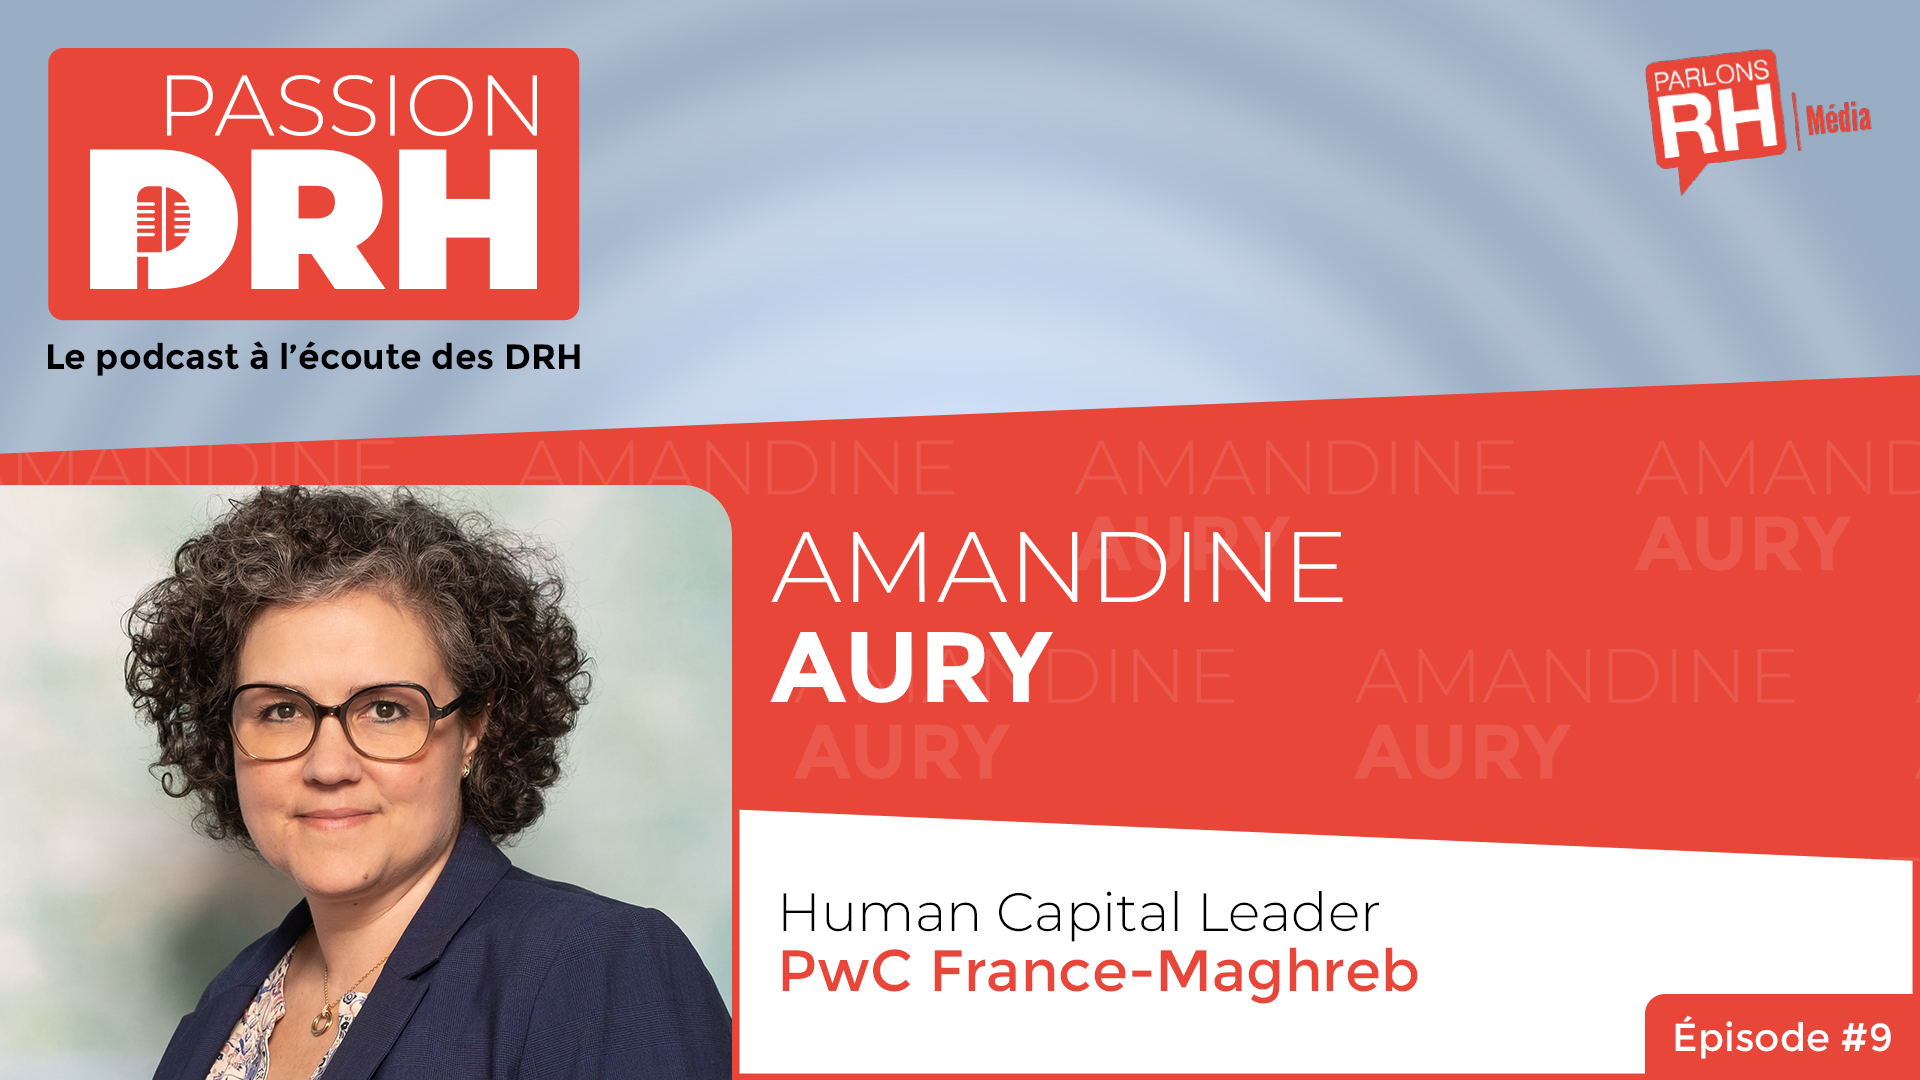 [Podcast] PASSION DRH, épisode 9 : Amandine Aury, PwC France-Maghreb